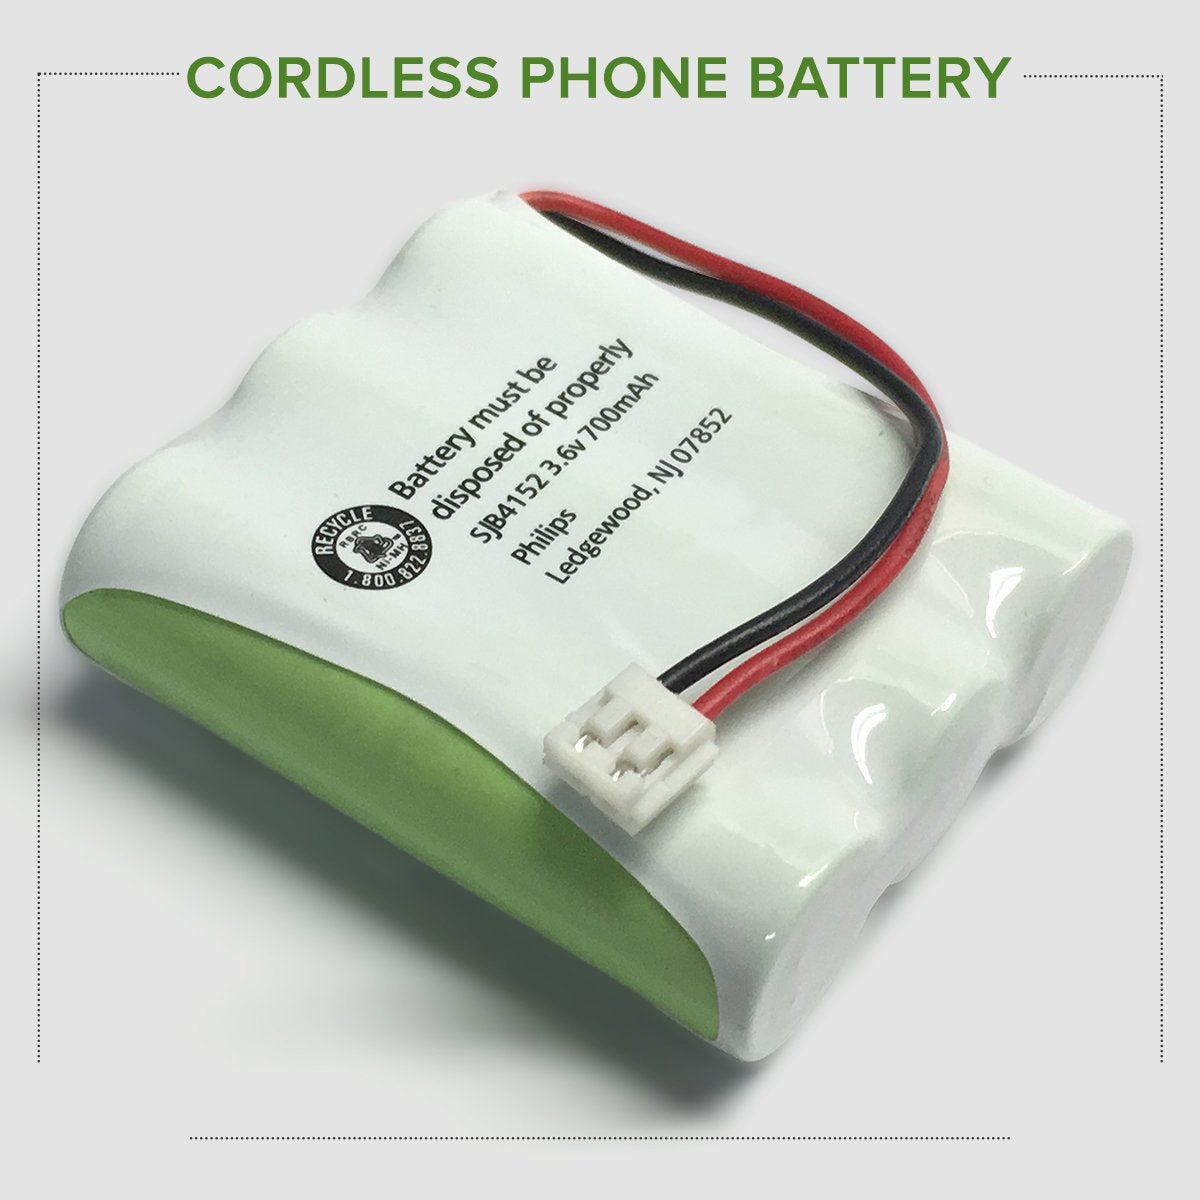 GE 5-2548 Cordless Phone Battery